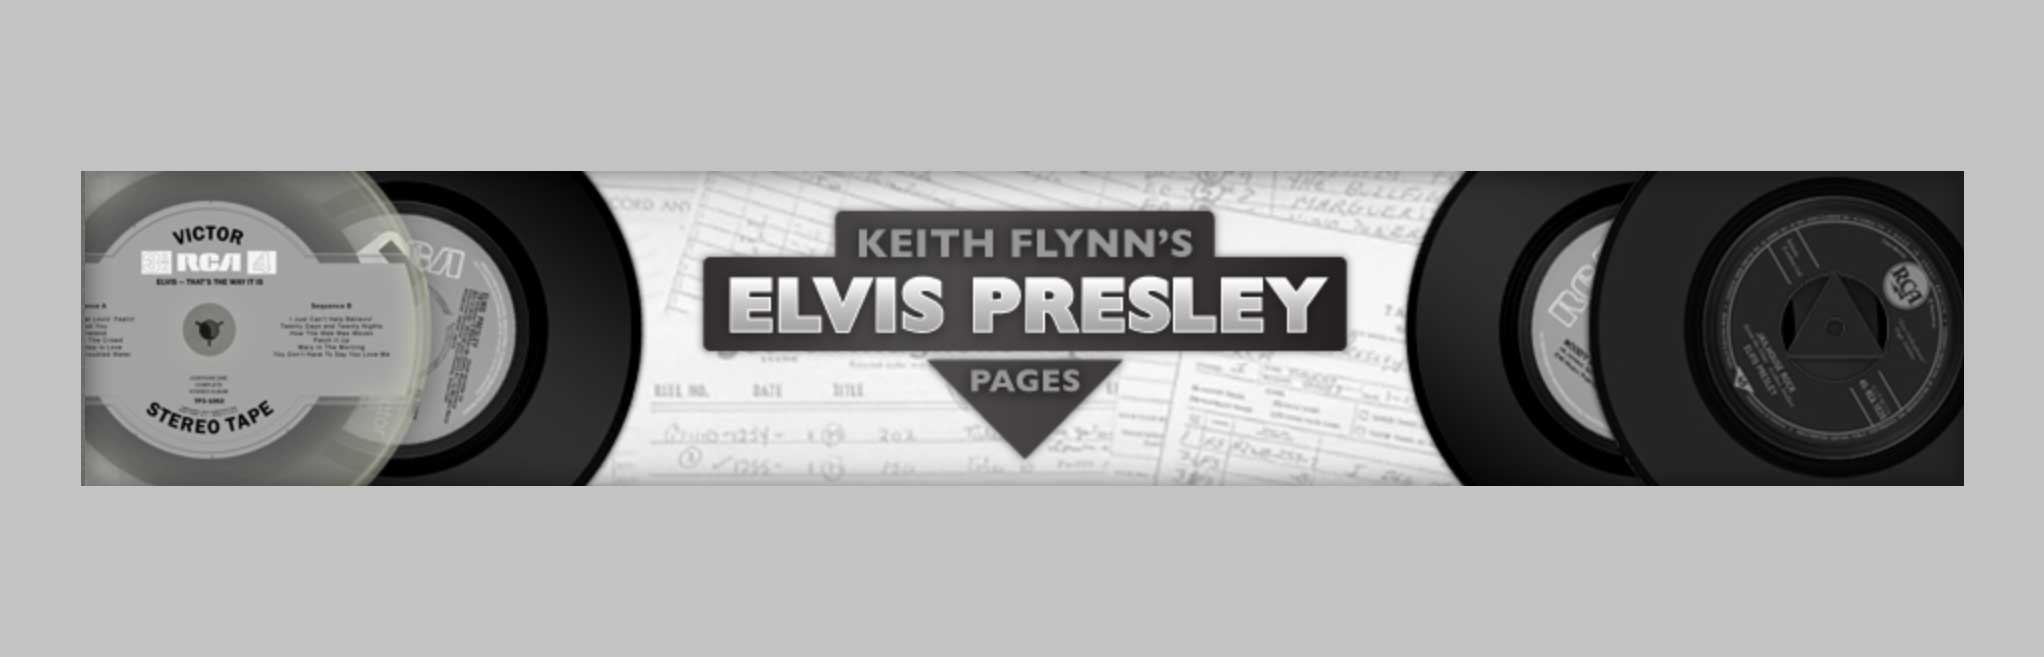 keith flynn elvis presley pages banner